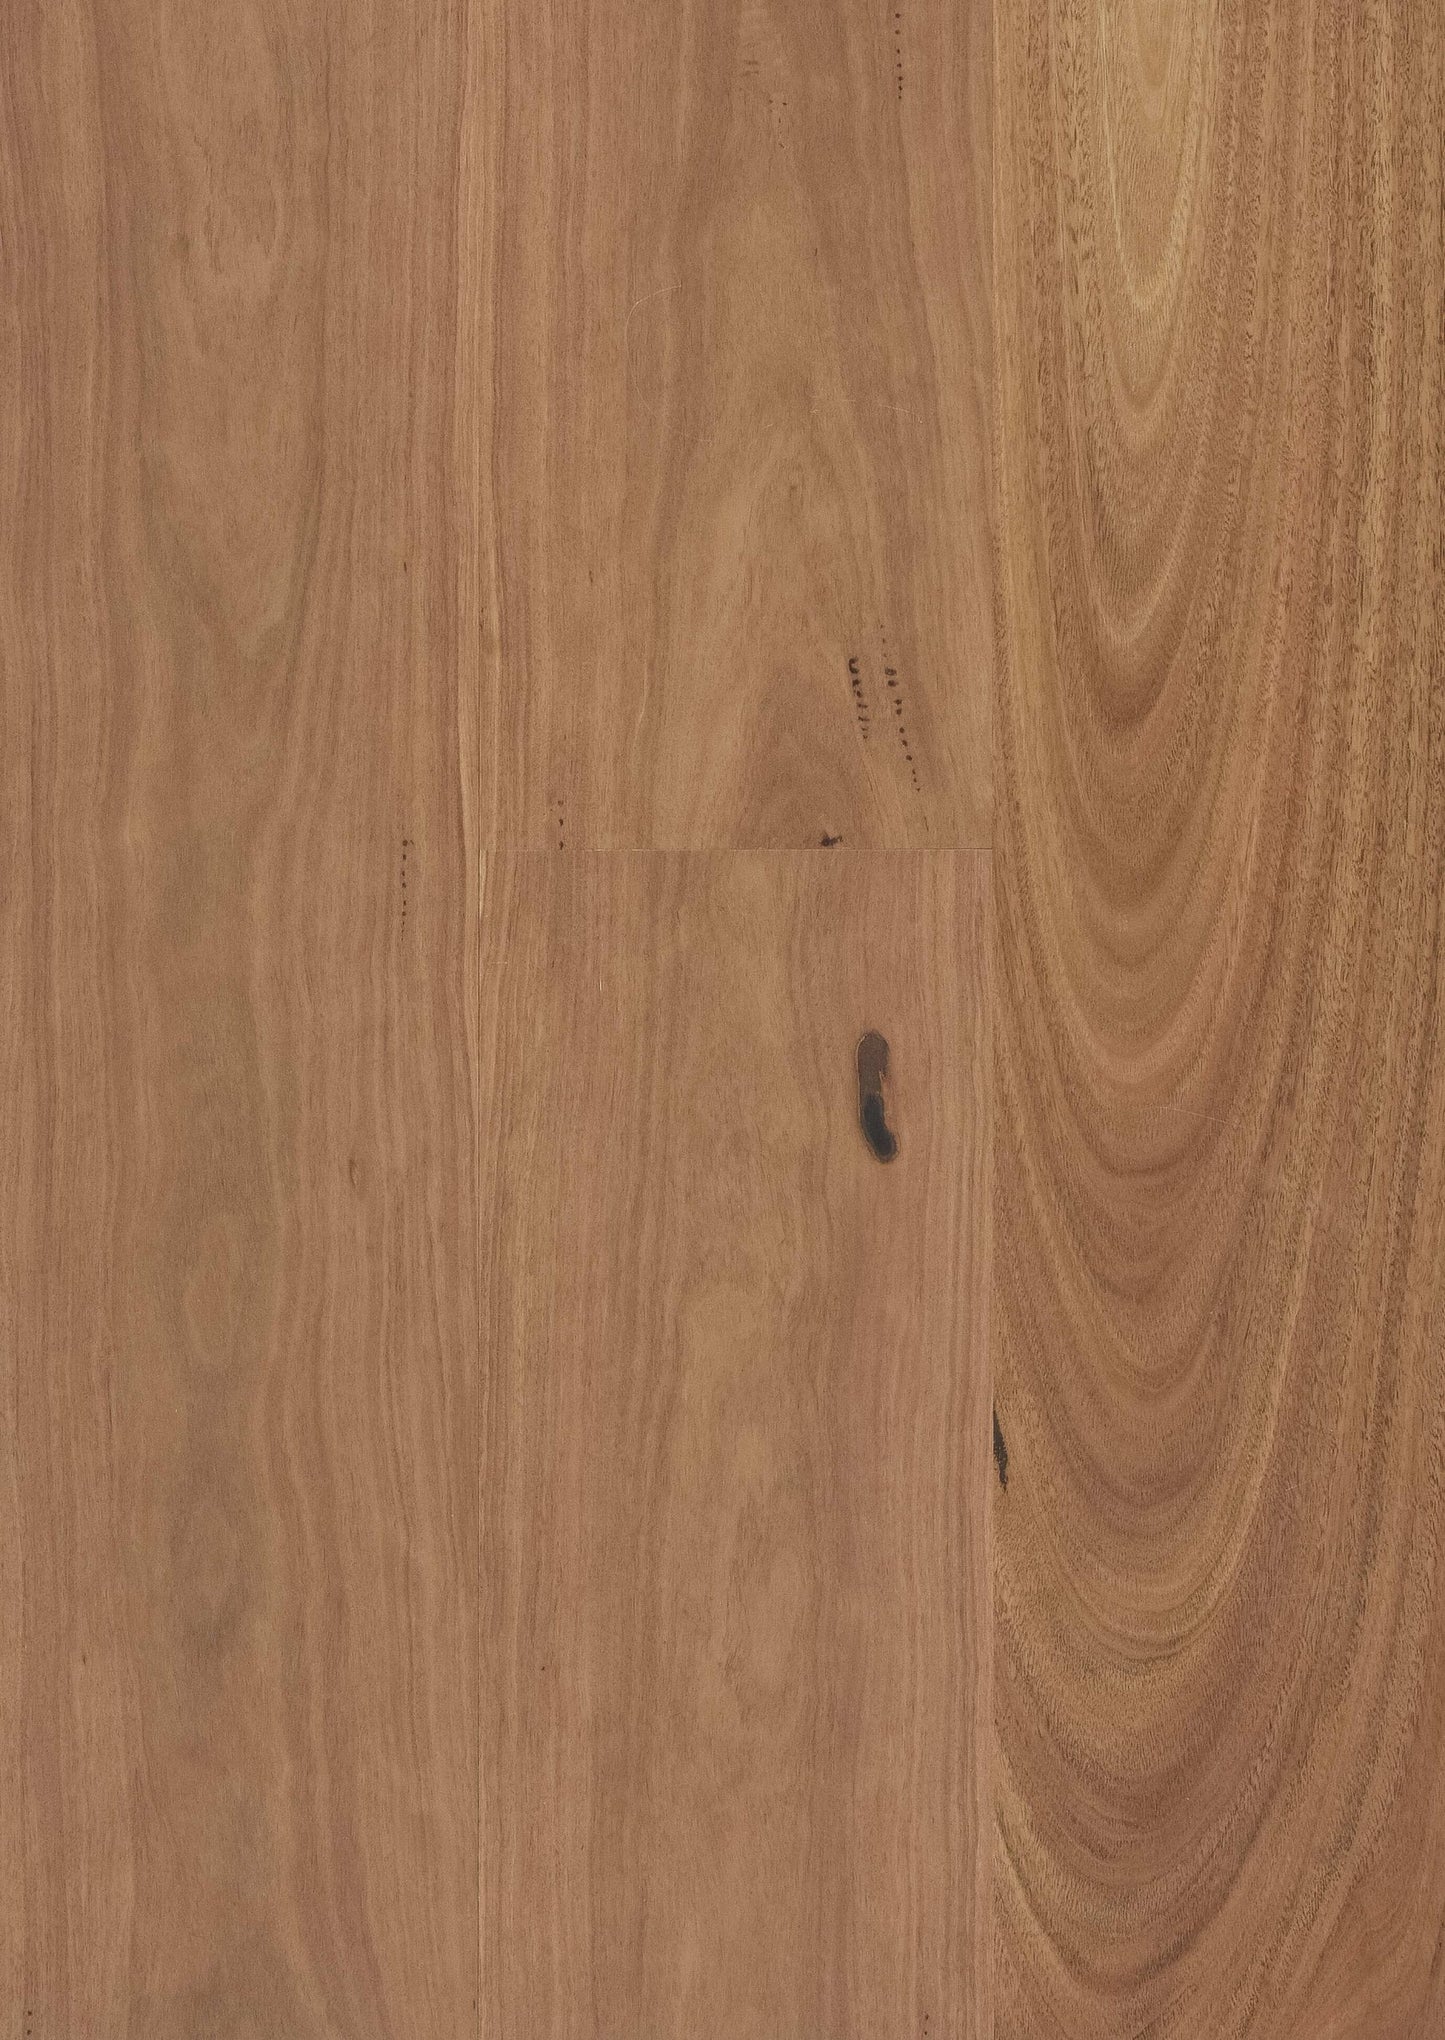 Engineered Timber Australian Hardwood (Spotted Gum)